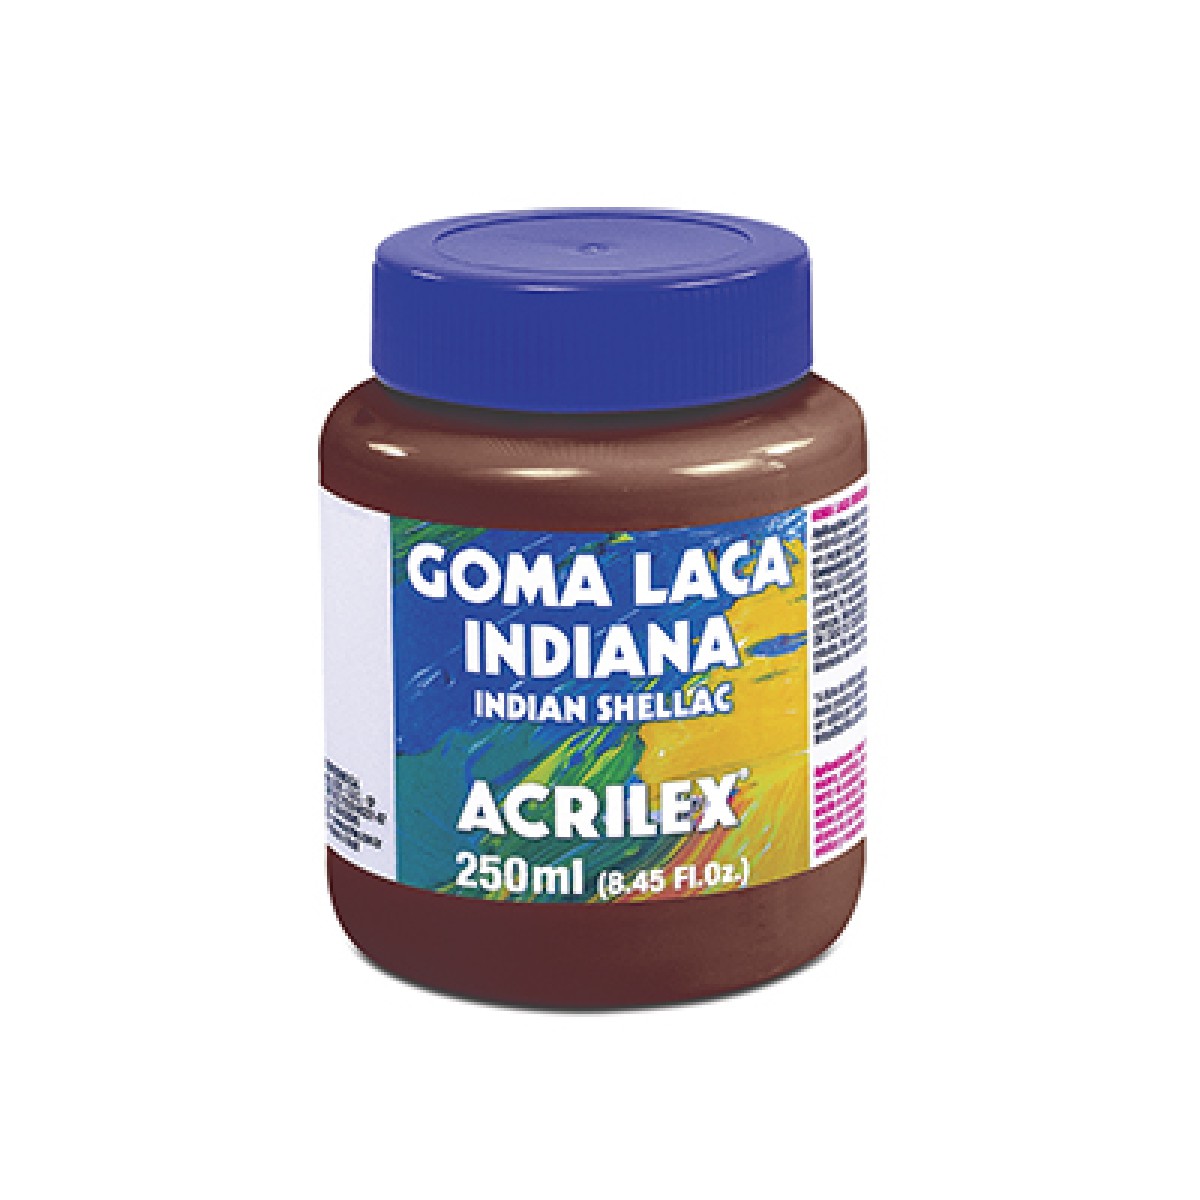 GOMA LACA INDIANA 250 ml